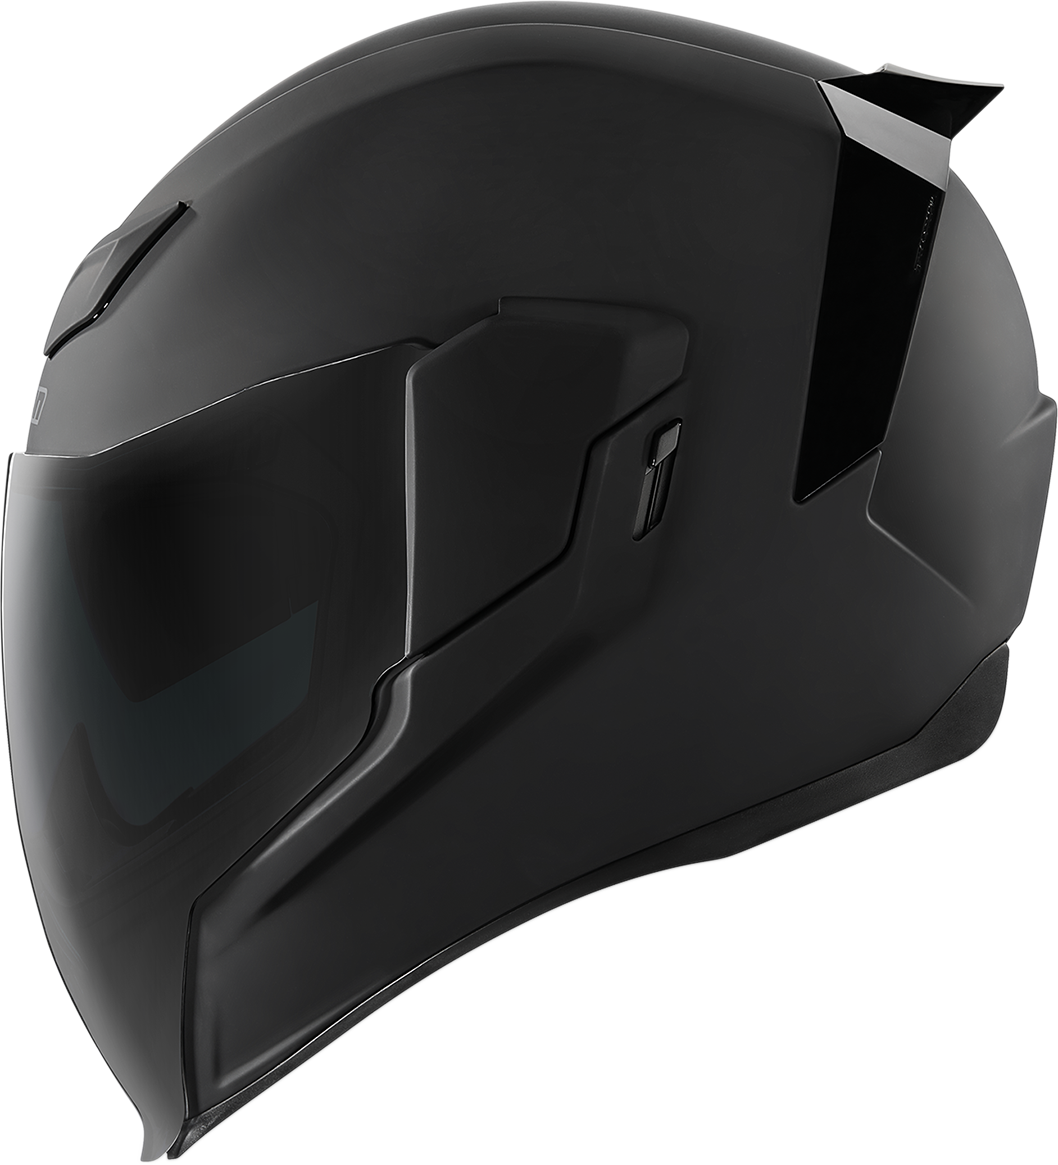 ICON Airflite™ Helmet - Rubatone - Black - Large 0101-10850